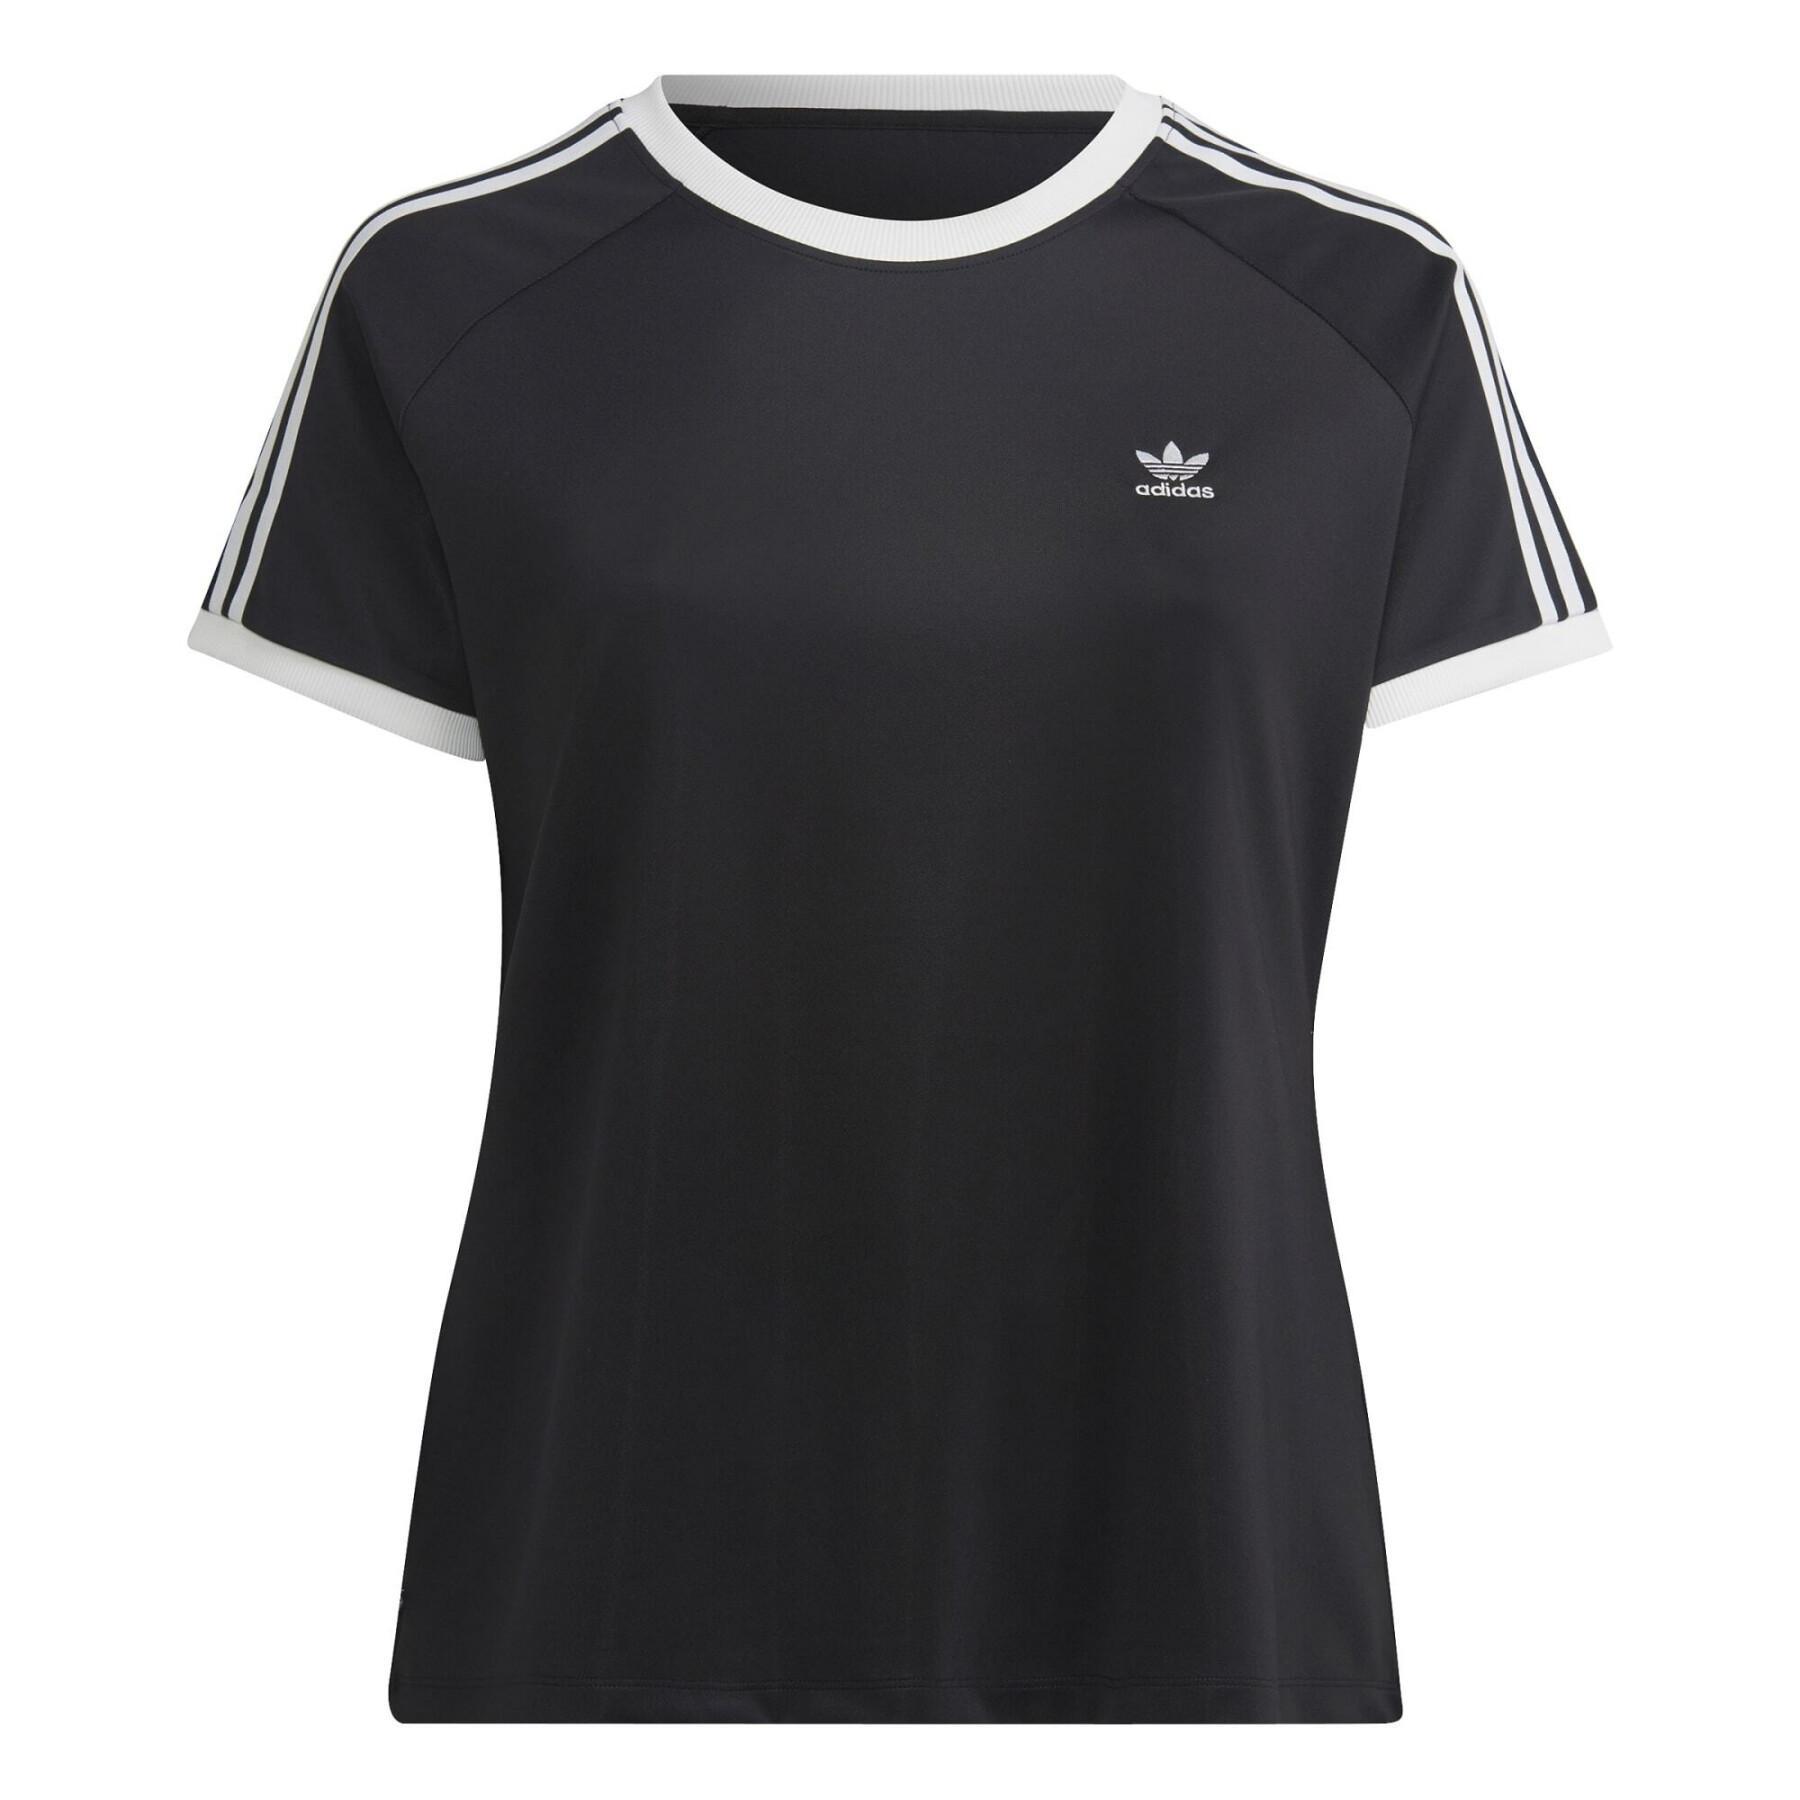 Eng anliegendes T-Shirt mit 3 Streifen, Damen adidas Originals Adicolor Classics